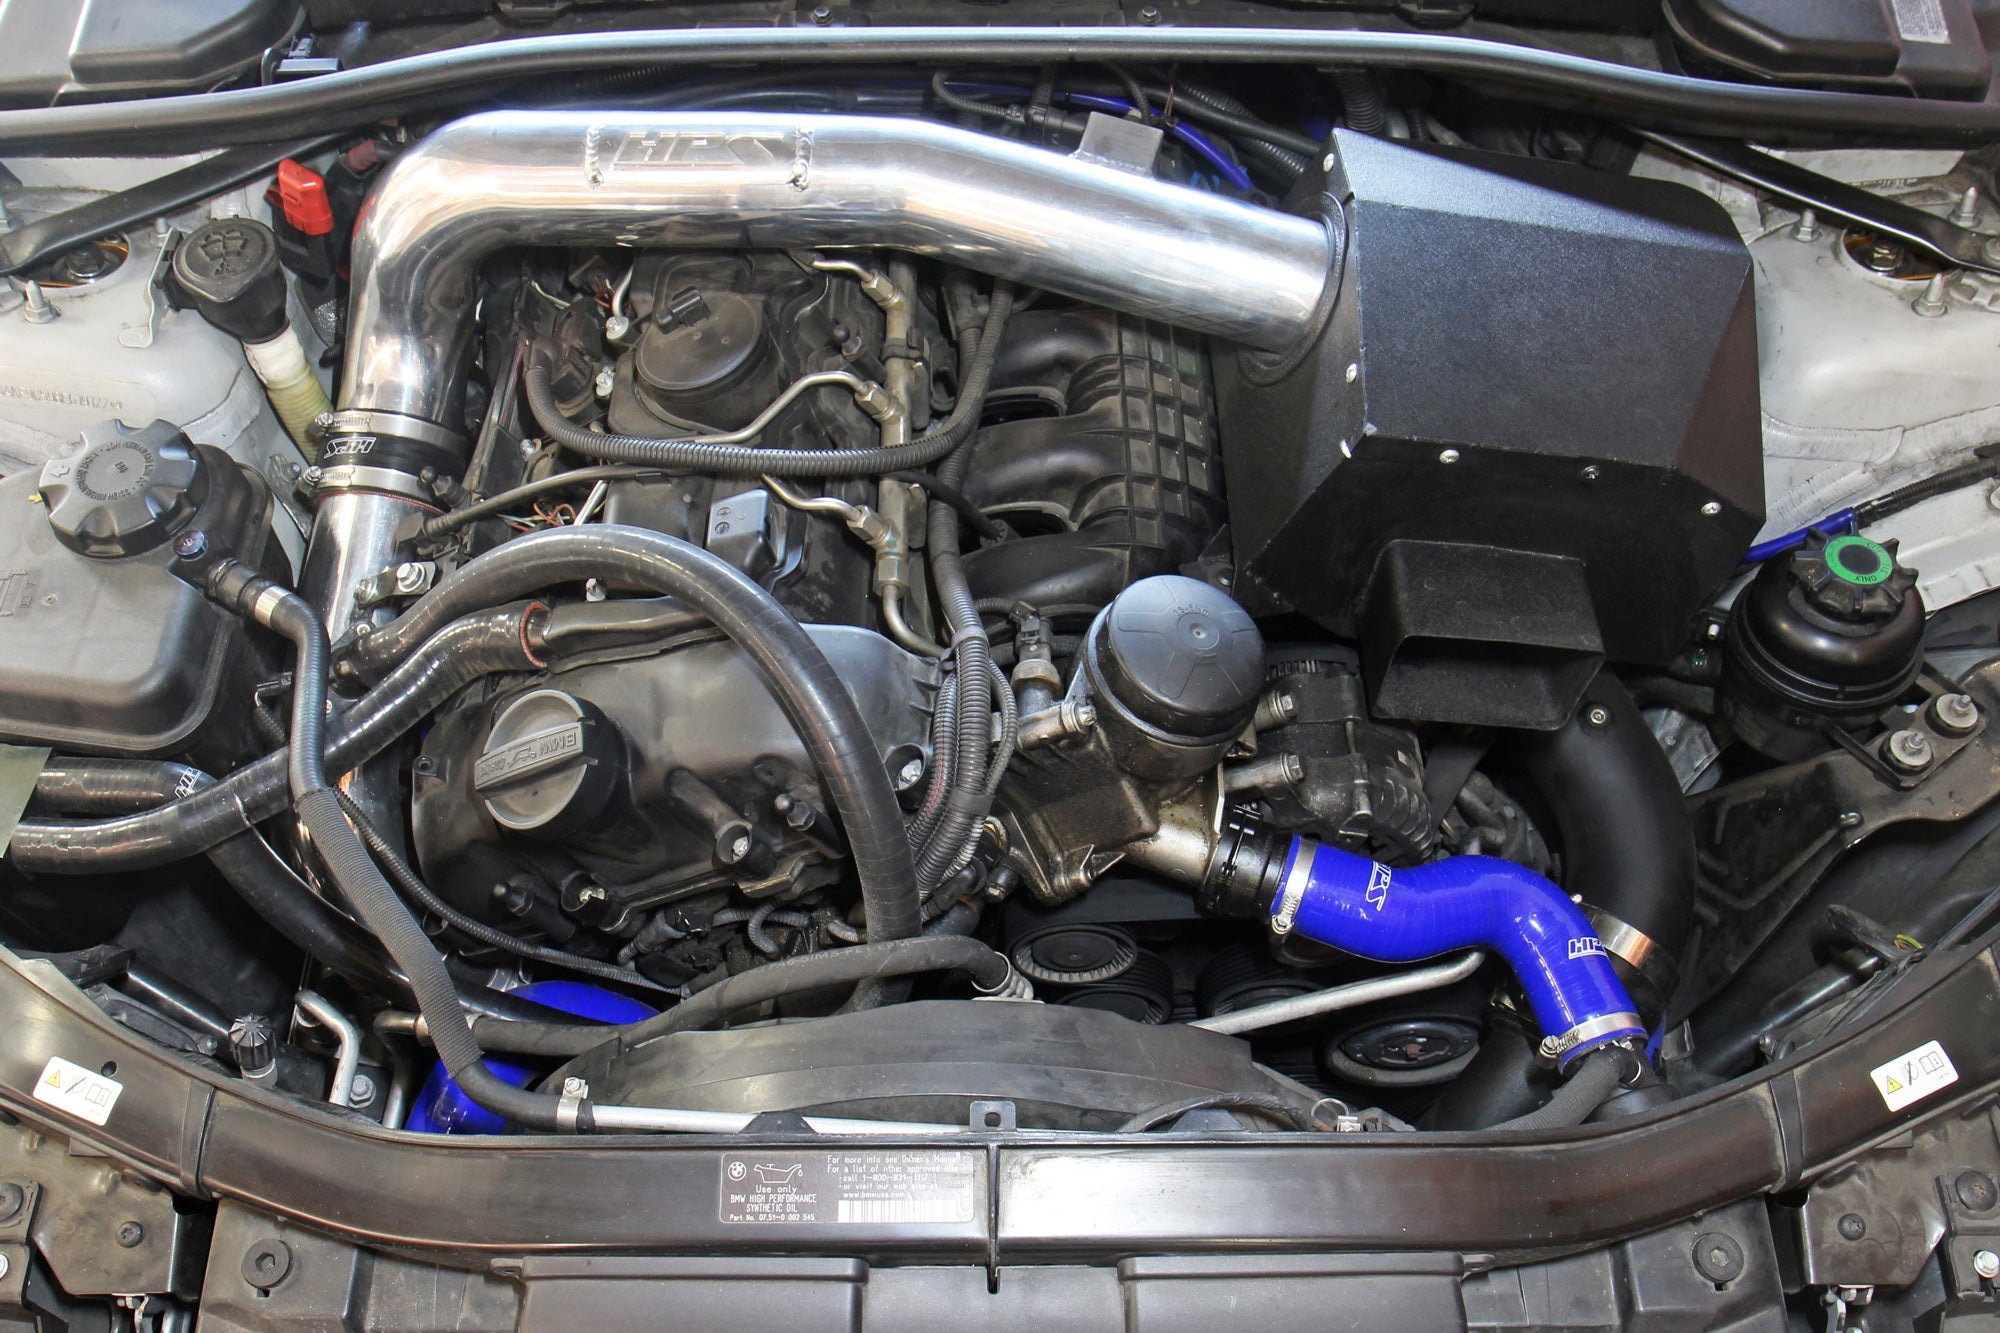 HPS Blue Silicone Lower Upper Radiator Coolant Hoses Installed BMW 135i 3.0L Turbo N54 E88 E82